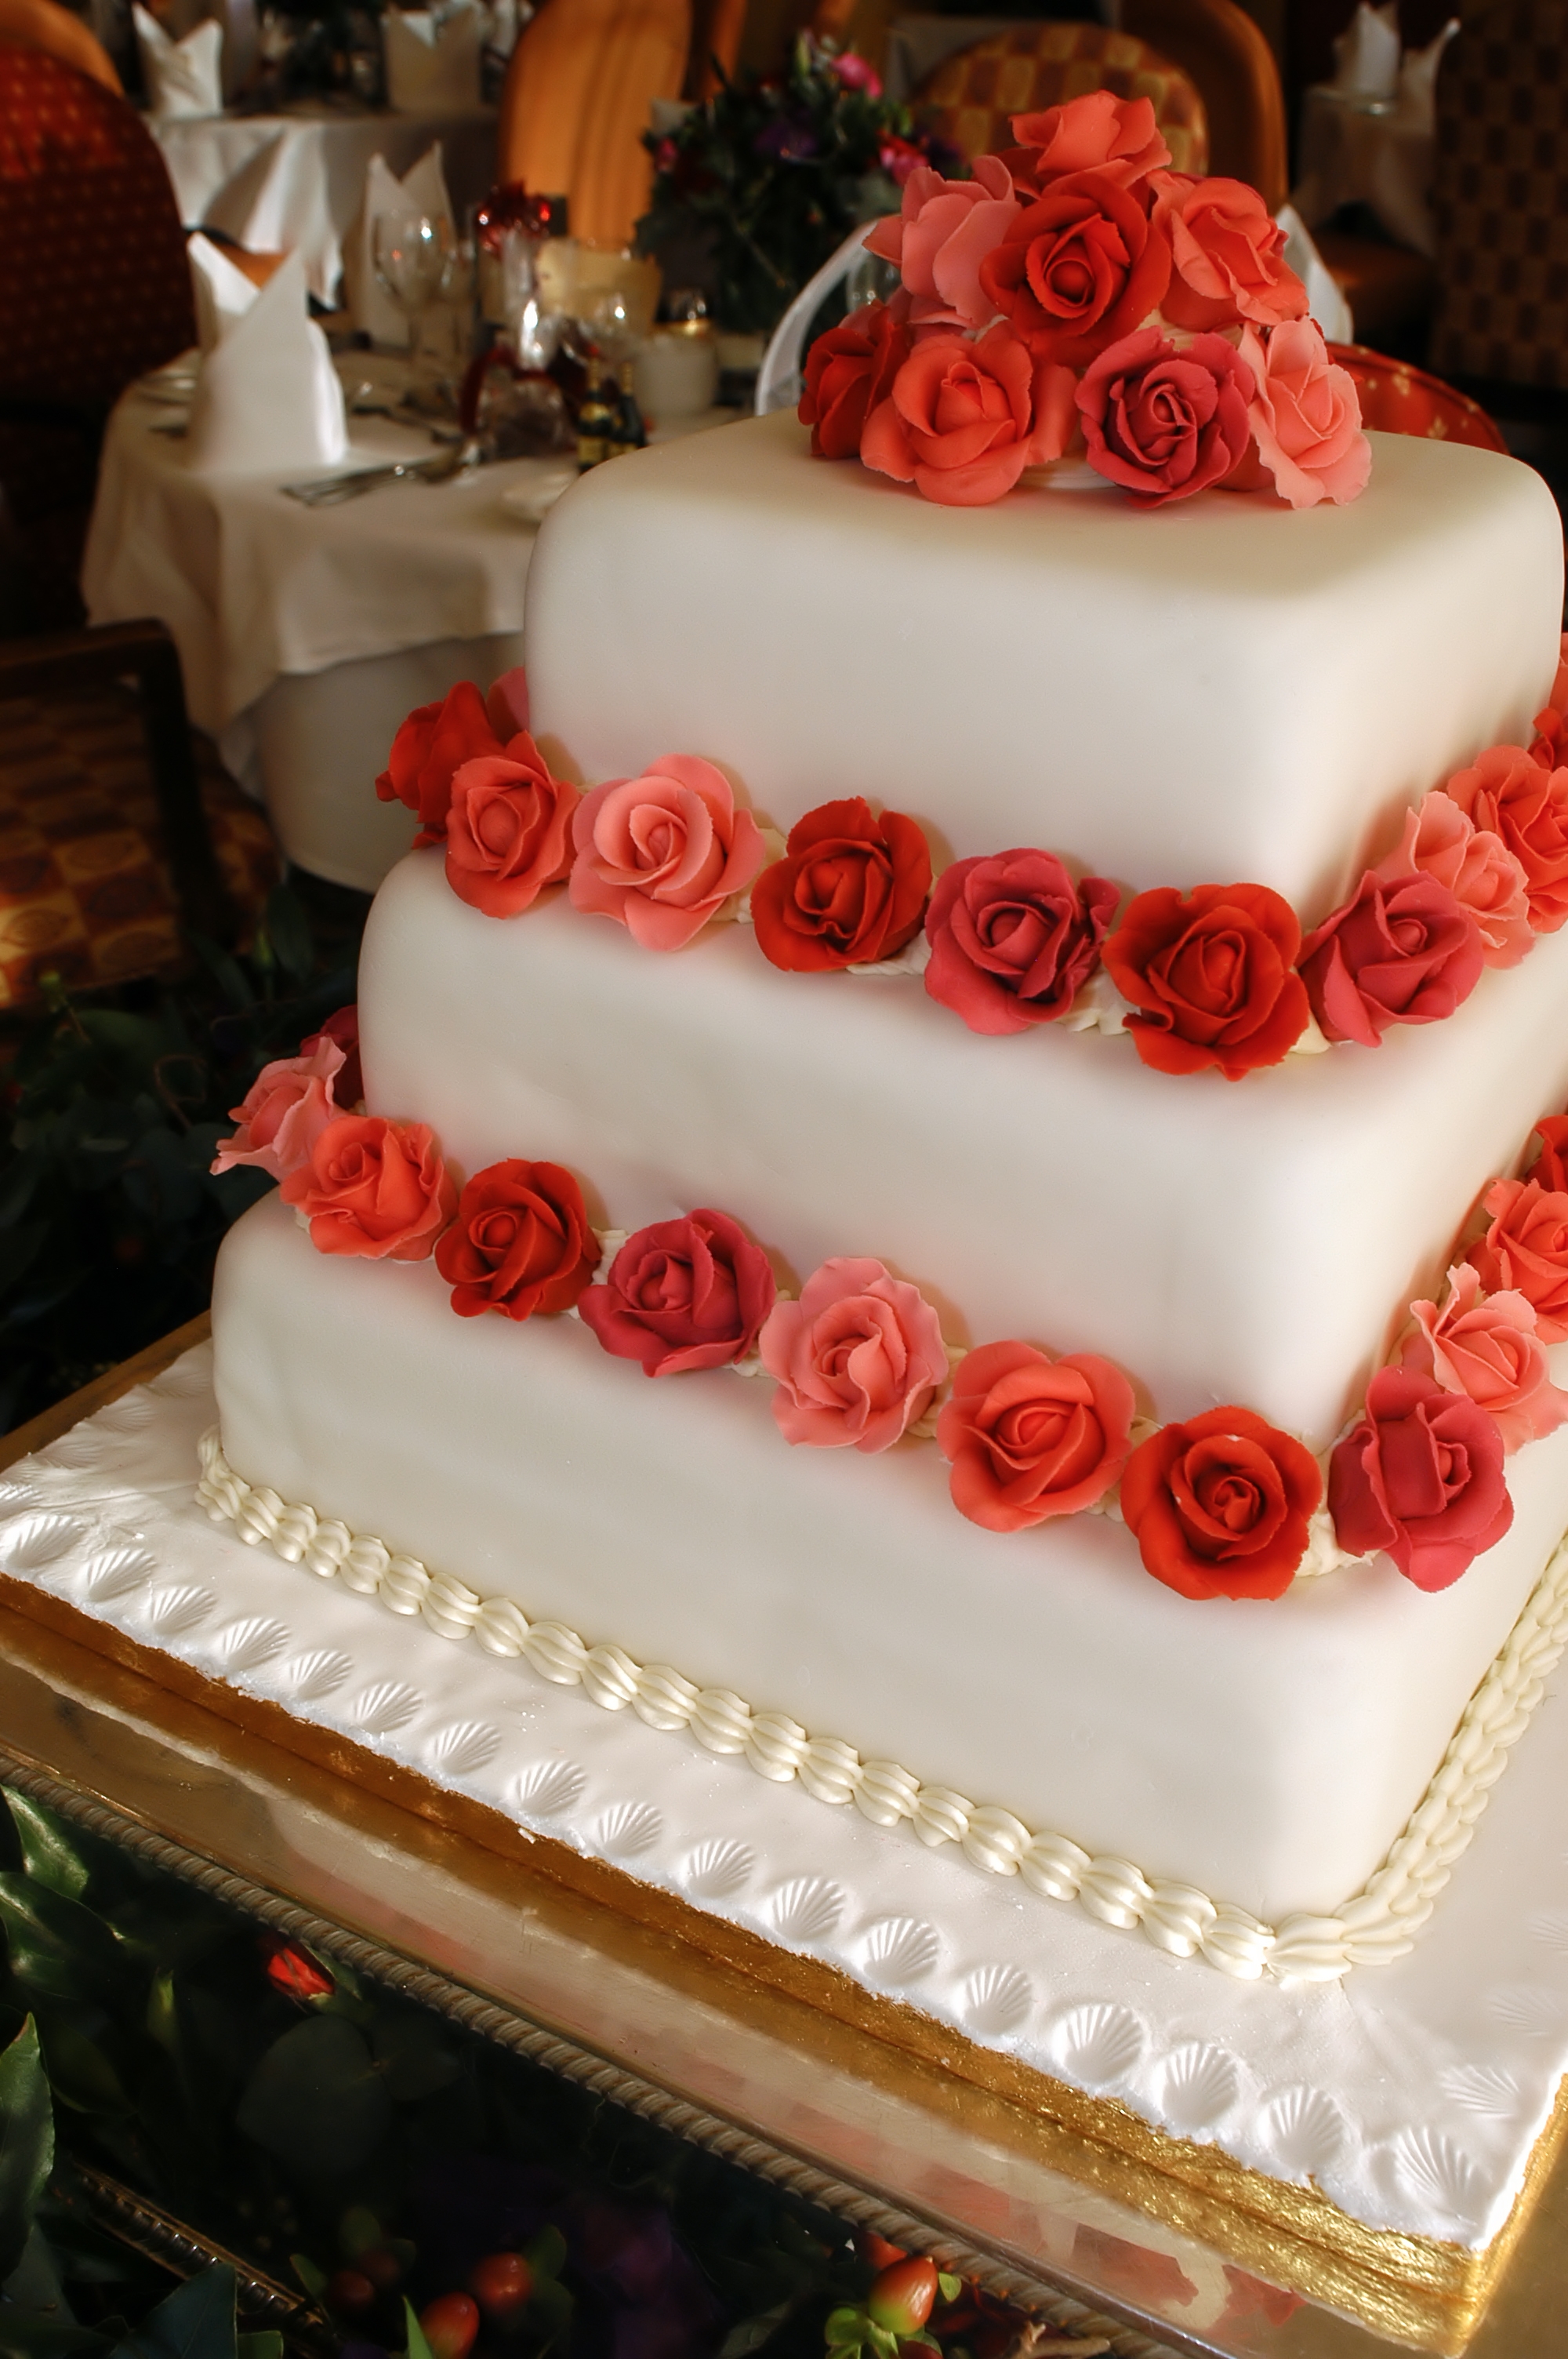 Red roses cake Image